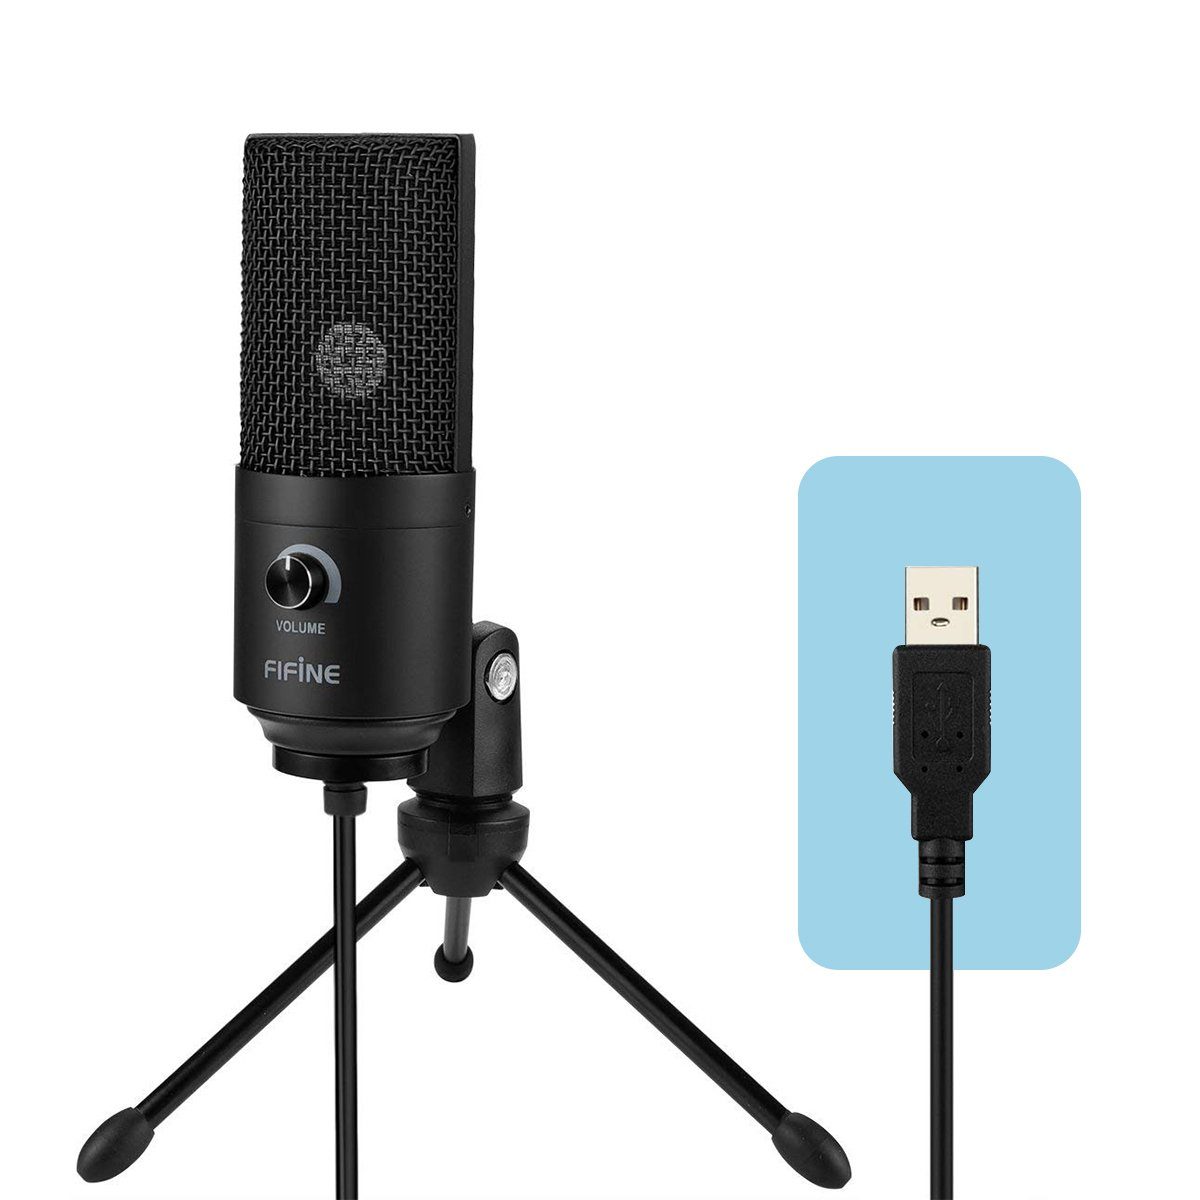 FIFINE Mikrofon »USB Kondensator Mikrofon Streaming mit Ständer, USB  Mikrofon Gaming mit Lautstärkeregler PC Mac, Tisch Mikrofon mit  Studioqualität in Großer Farbauswahl« online kaufen | OTTO